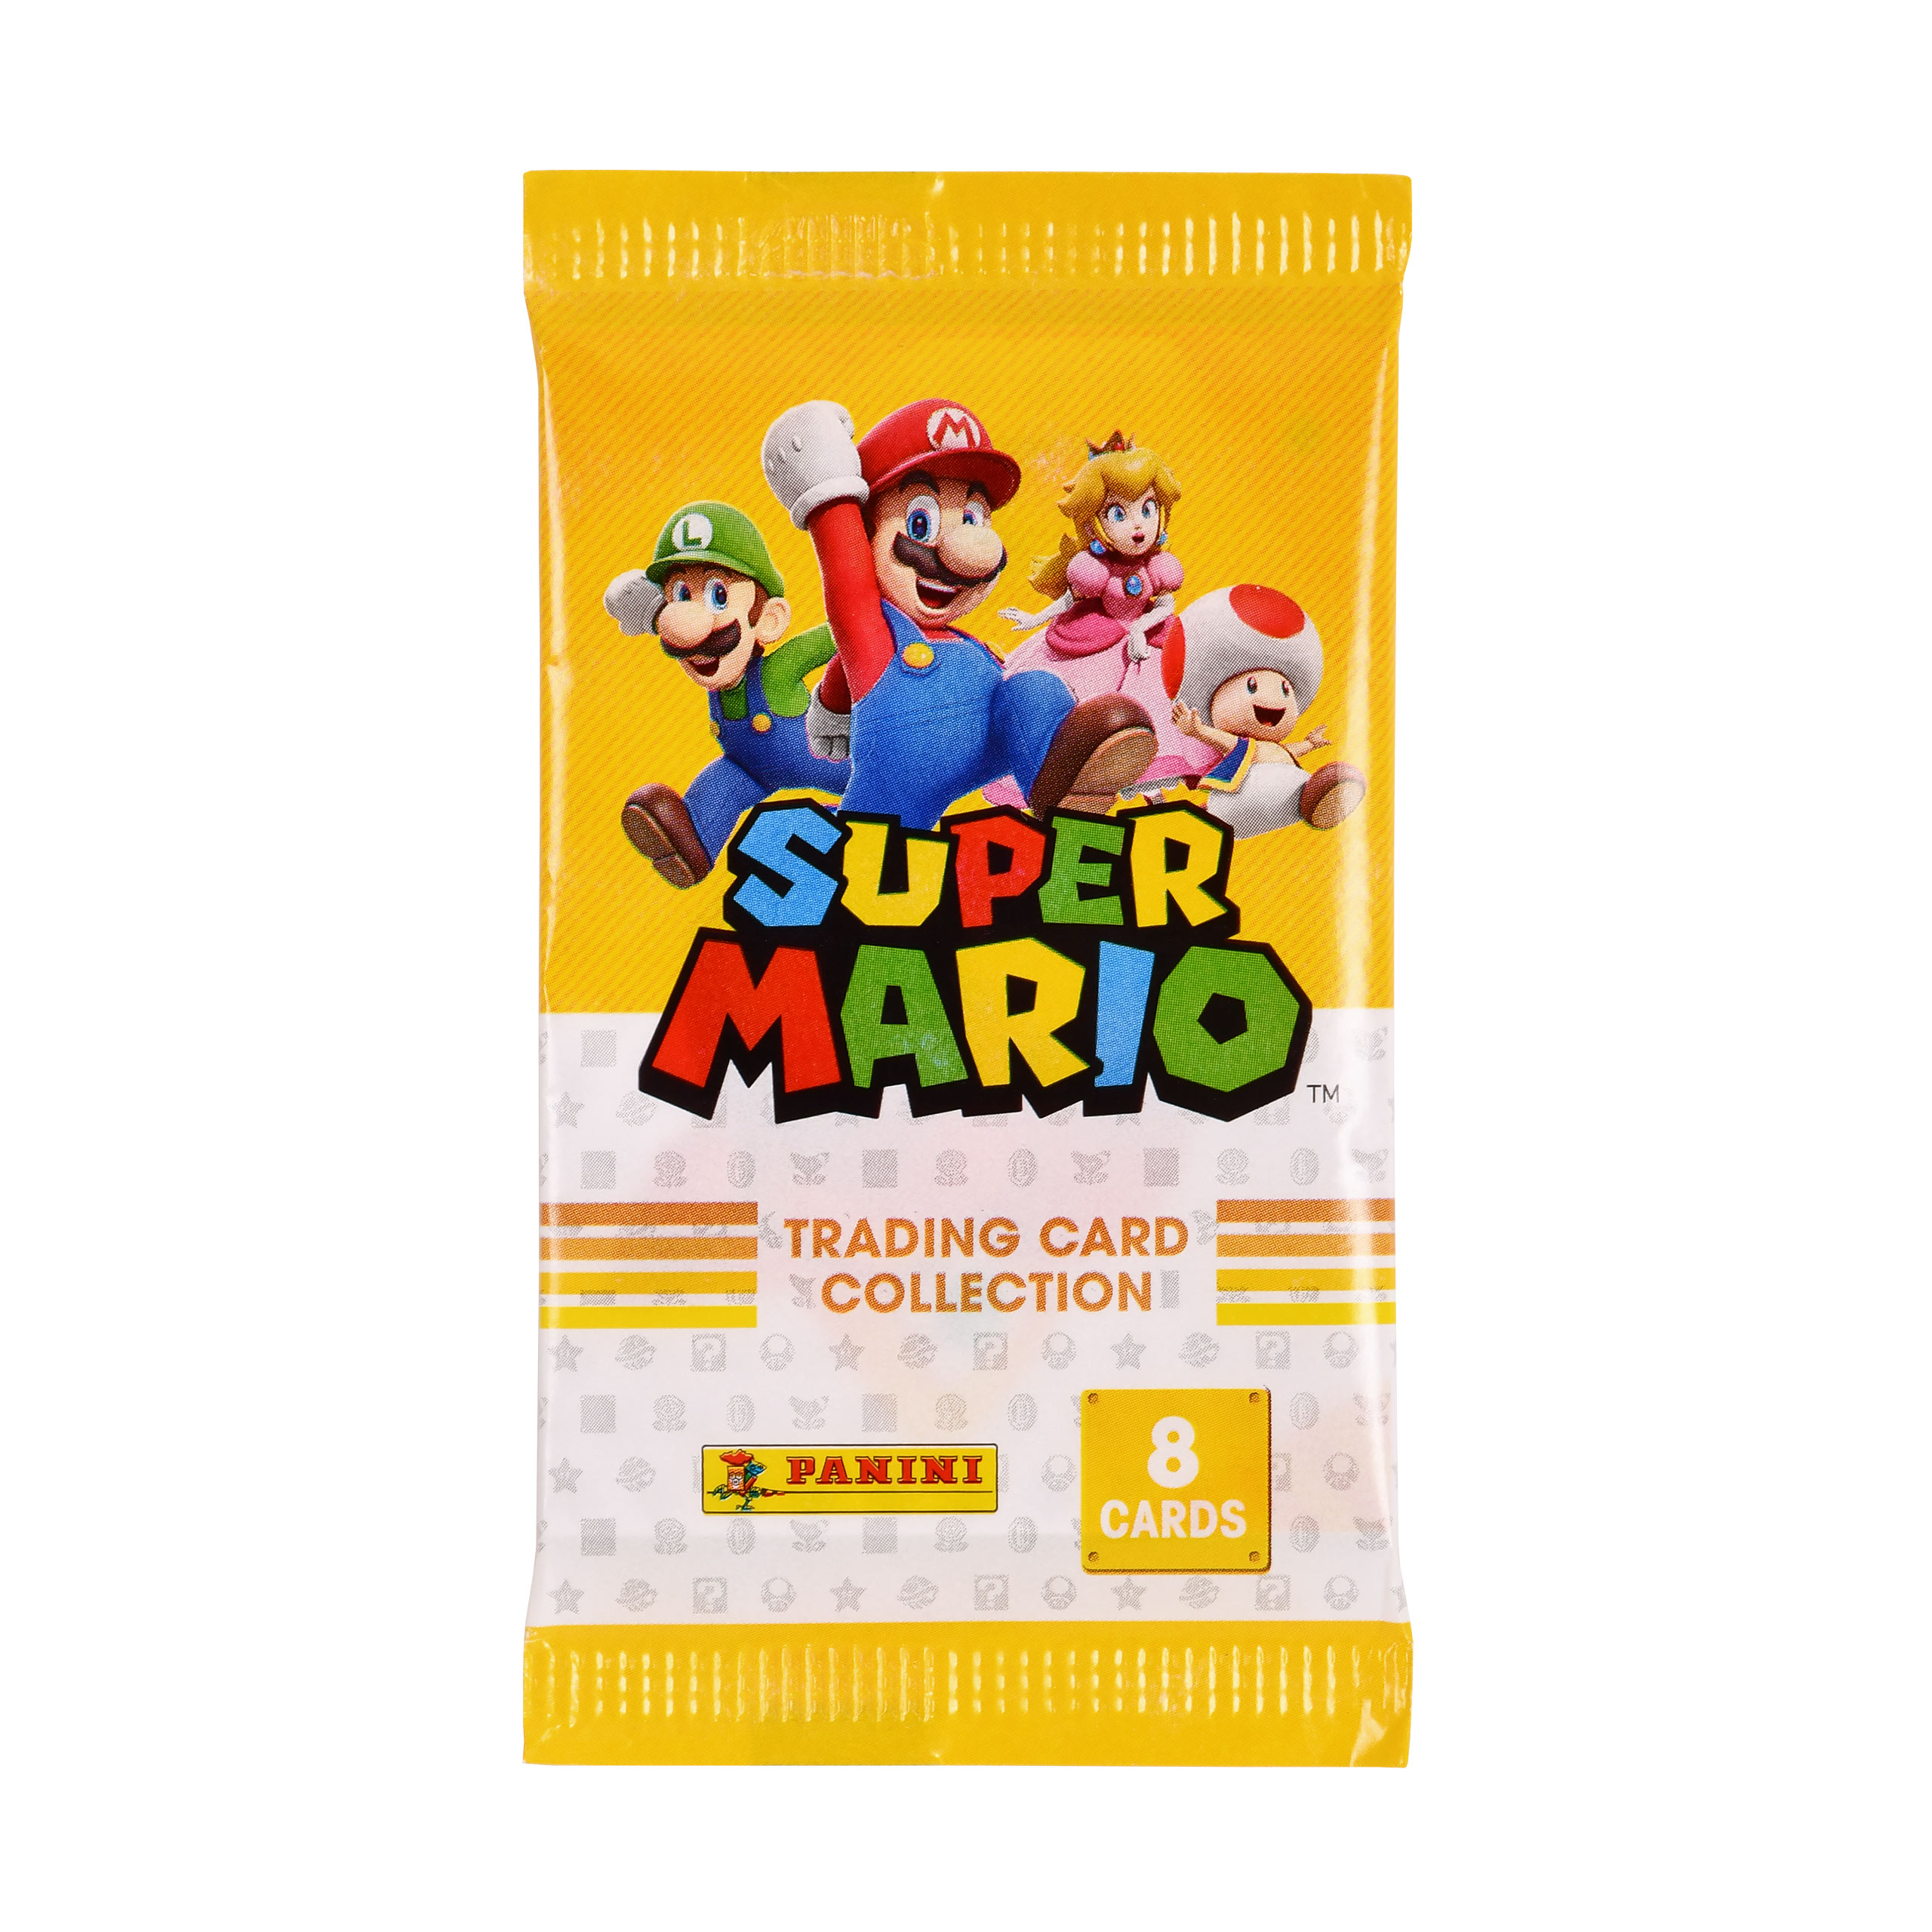 Super Mario - Aktions-Sammelkarten